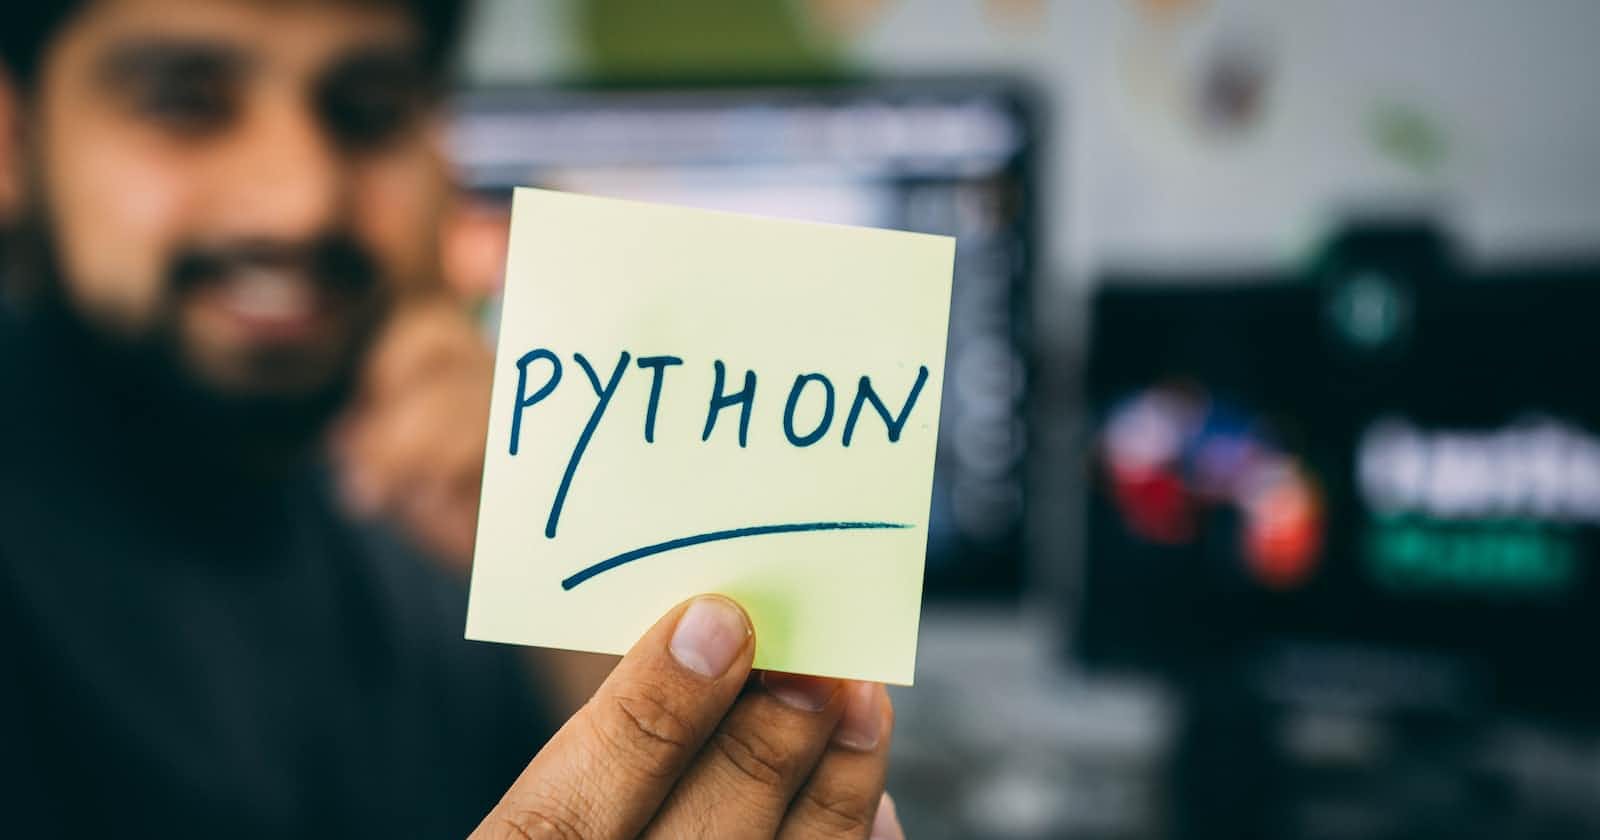 Python Programming for Beginners:
Jumpstart Your Coding Journey